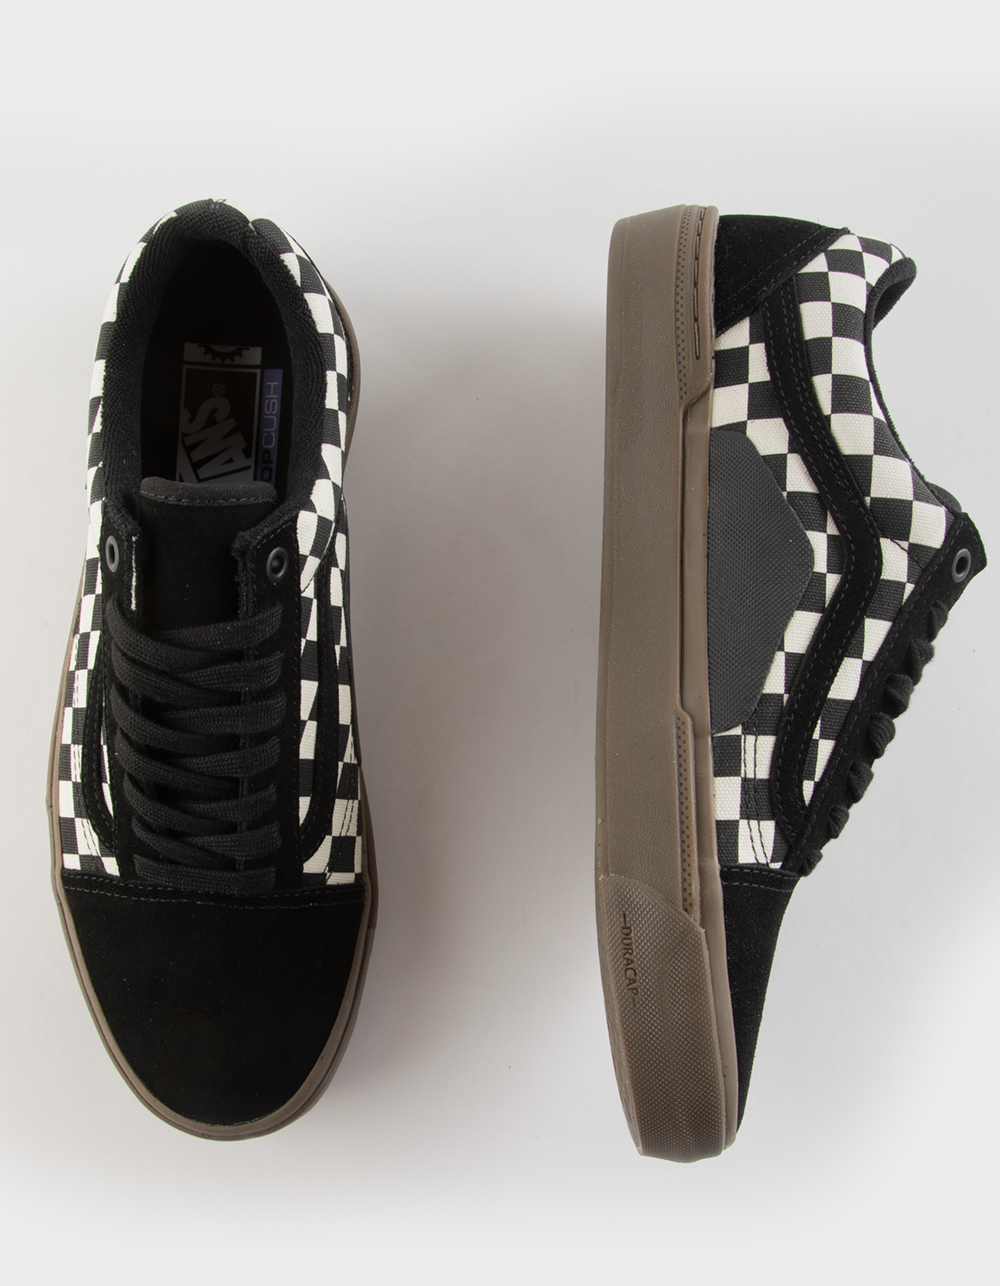 Vans - BMX Old Skool Shoes  Black Gum (Checkerboard